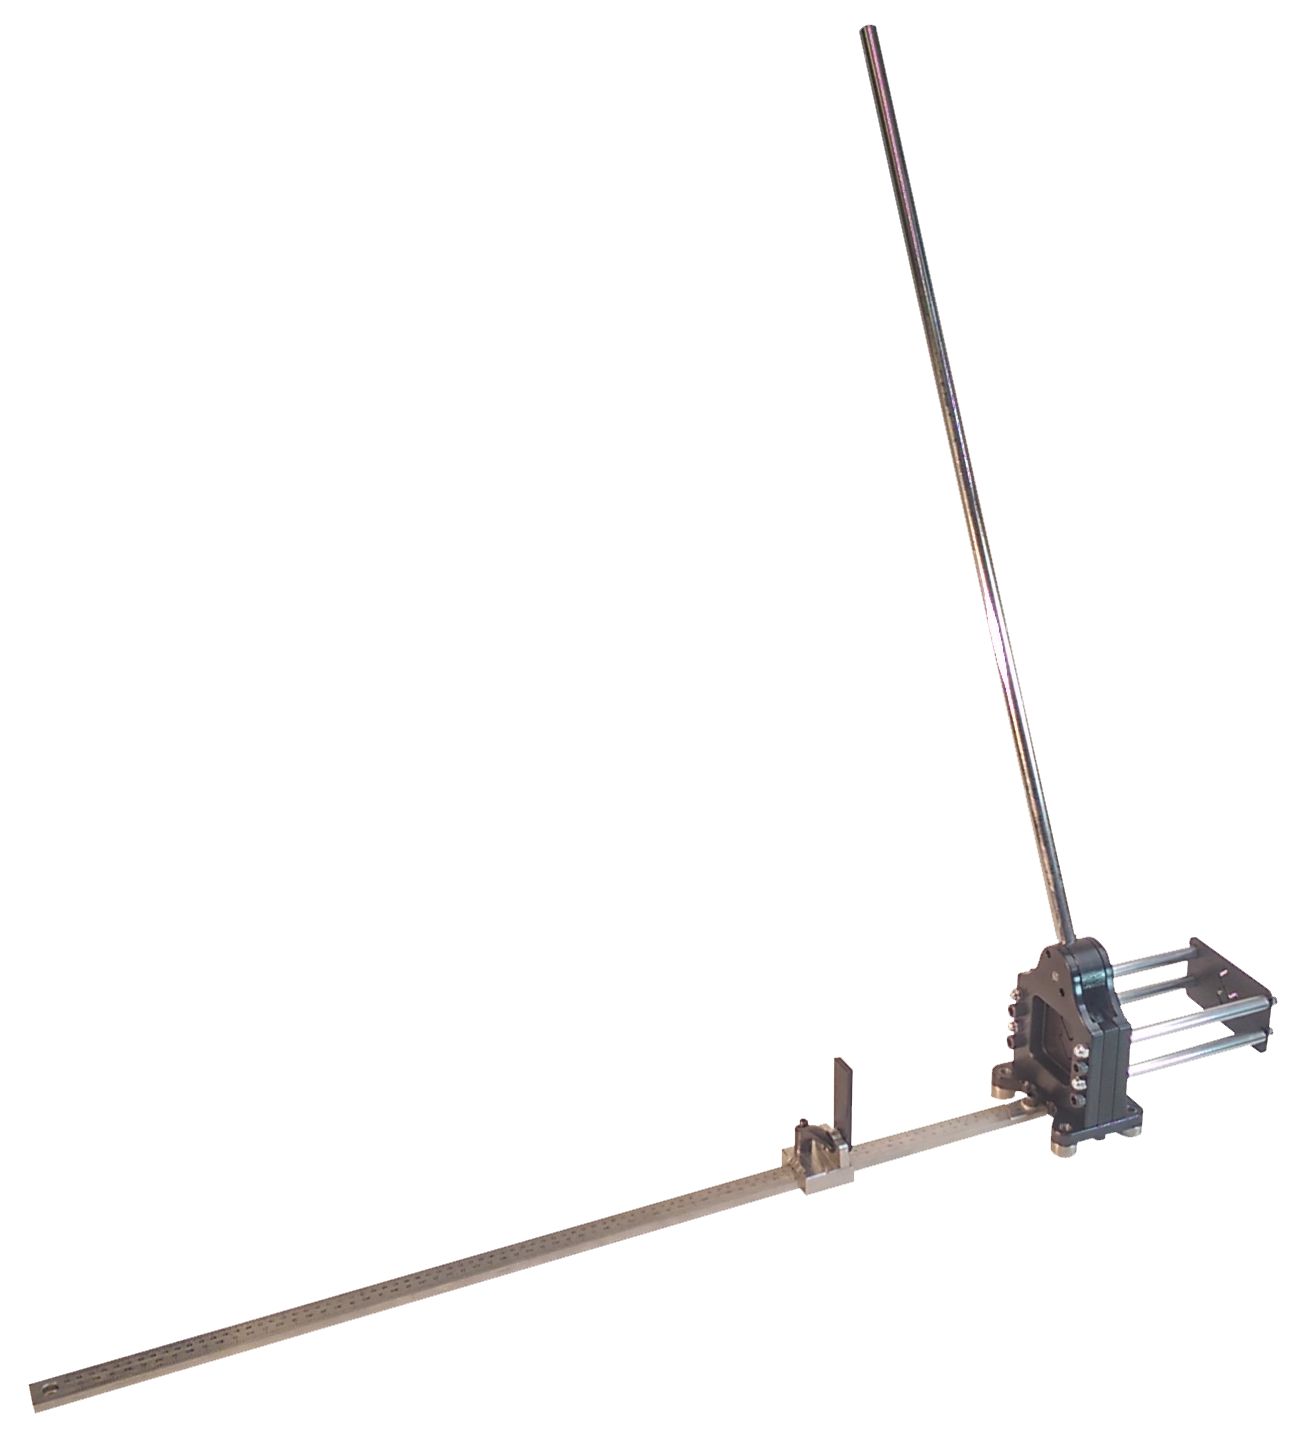 PSSG-2 - DIN profile rail cutting device